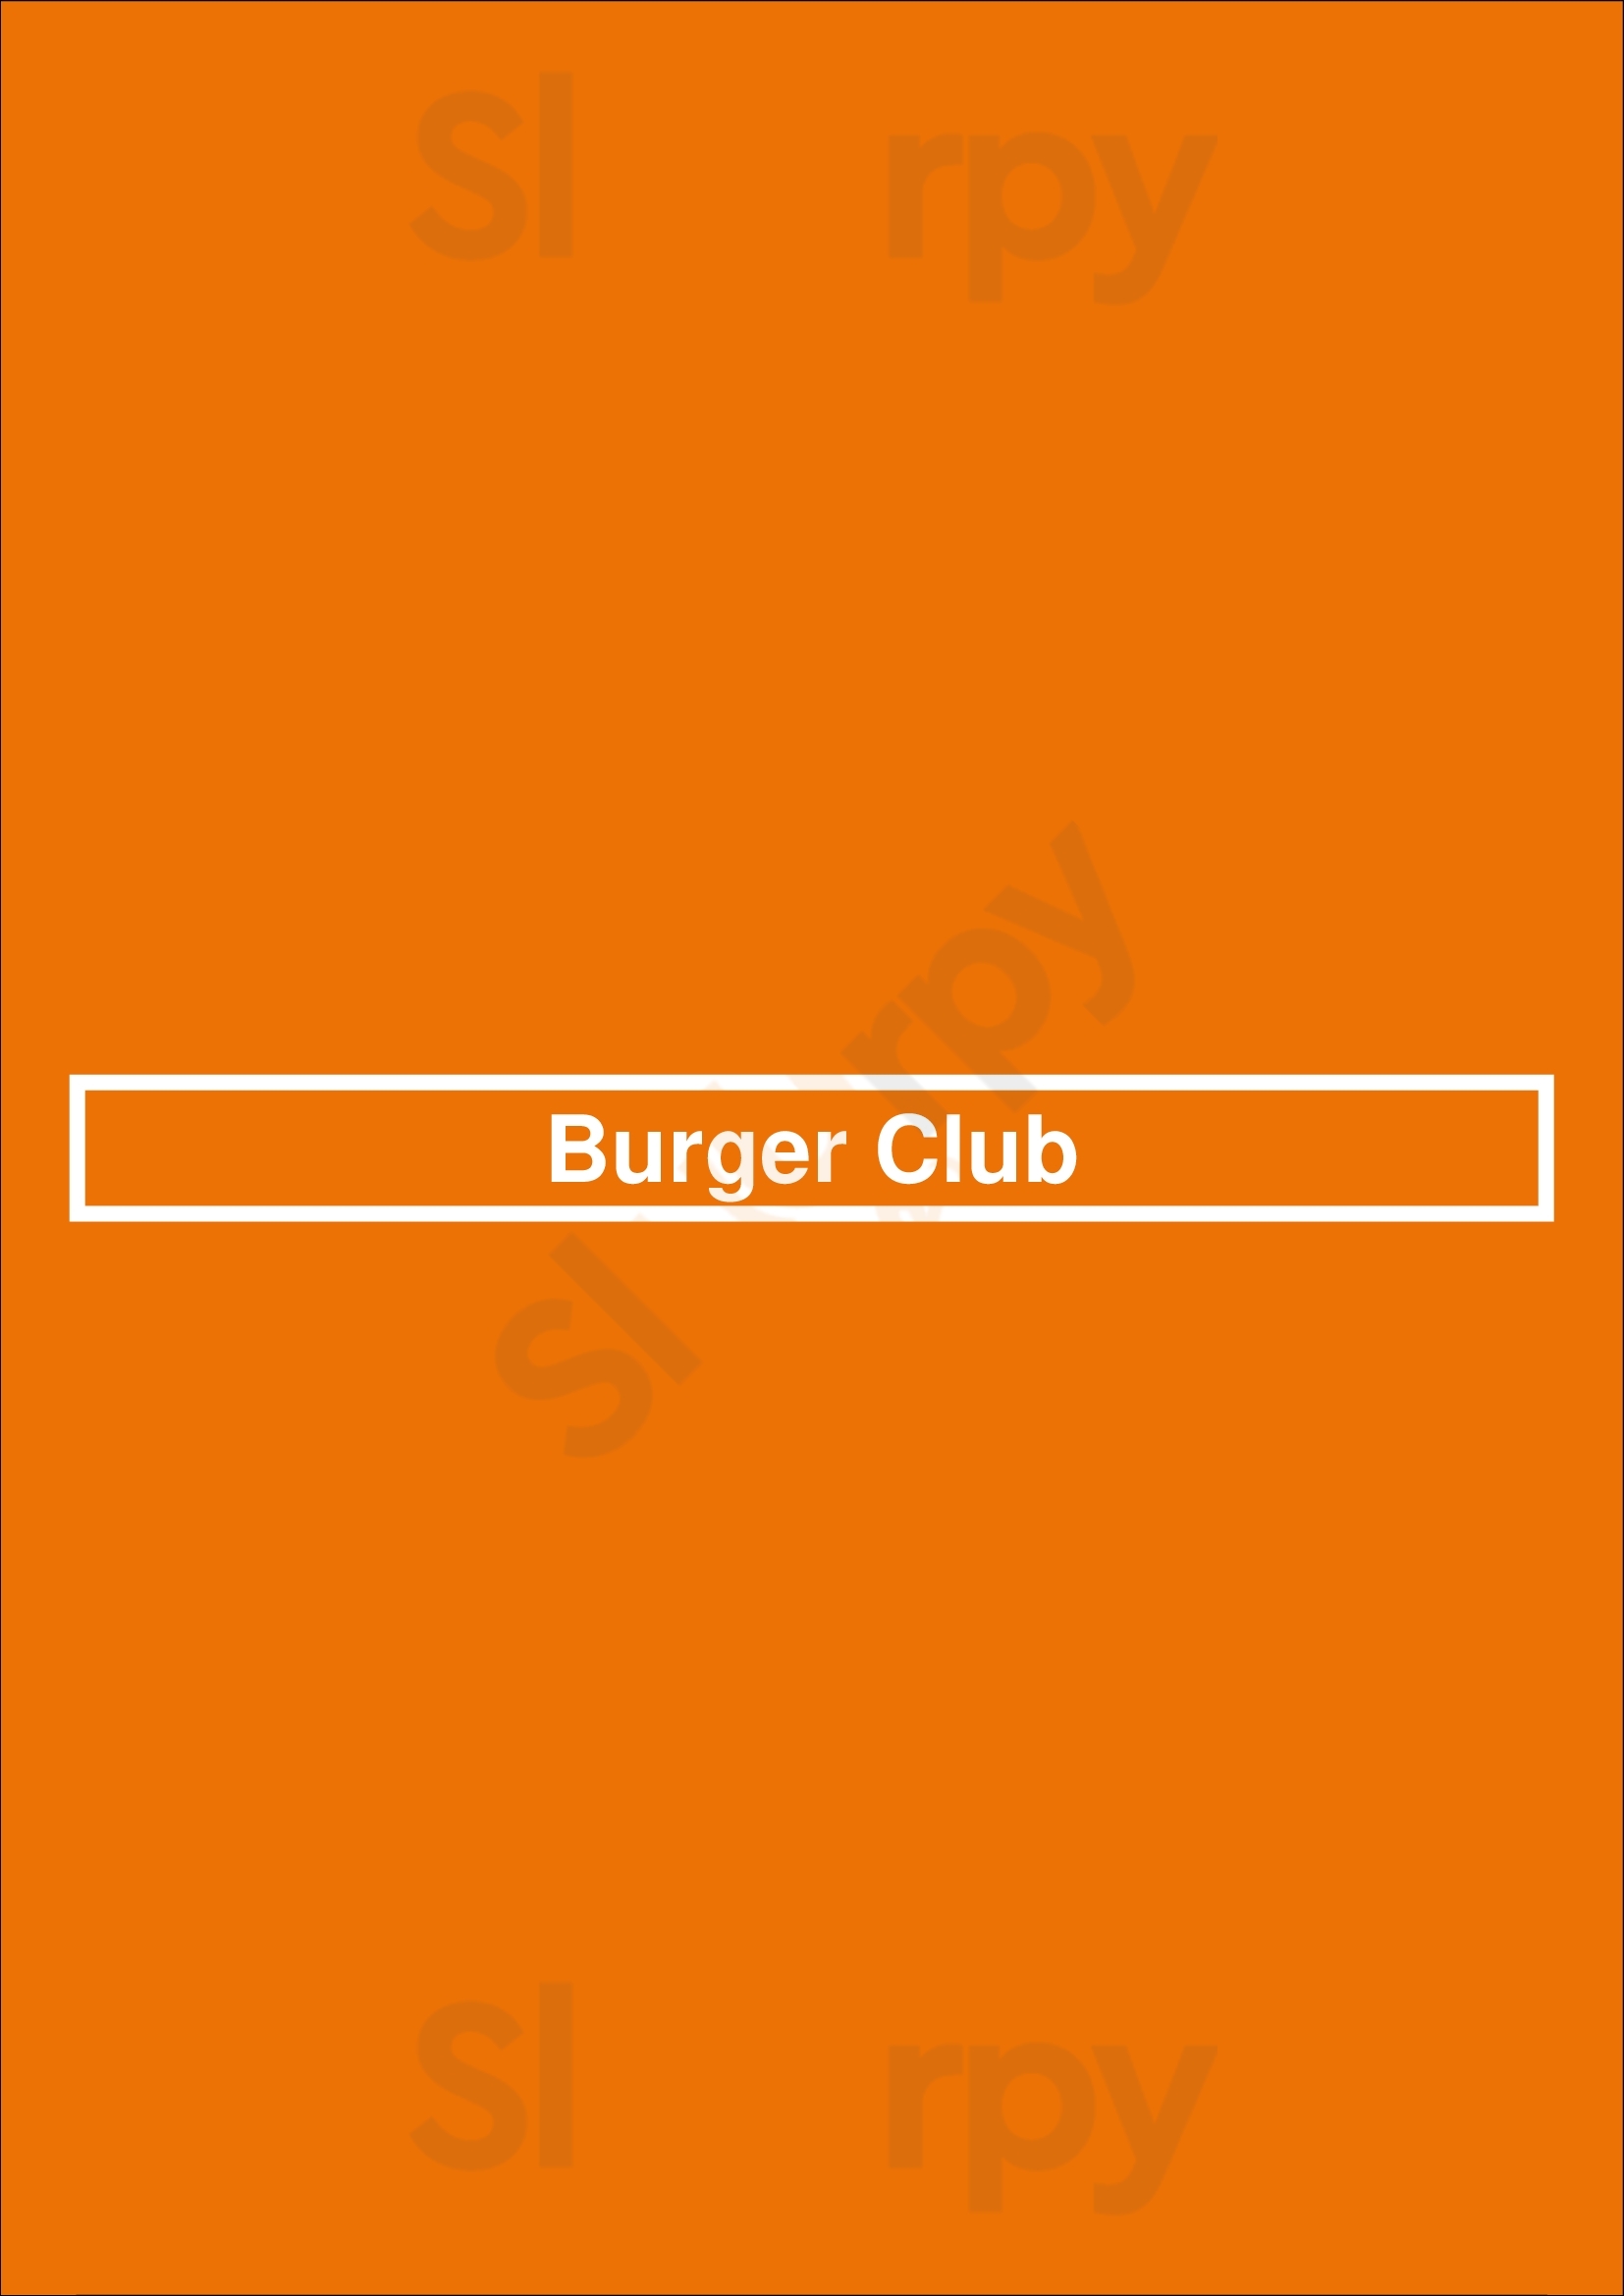 Burger Club Rotterdam Menu - 1